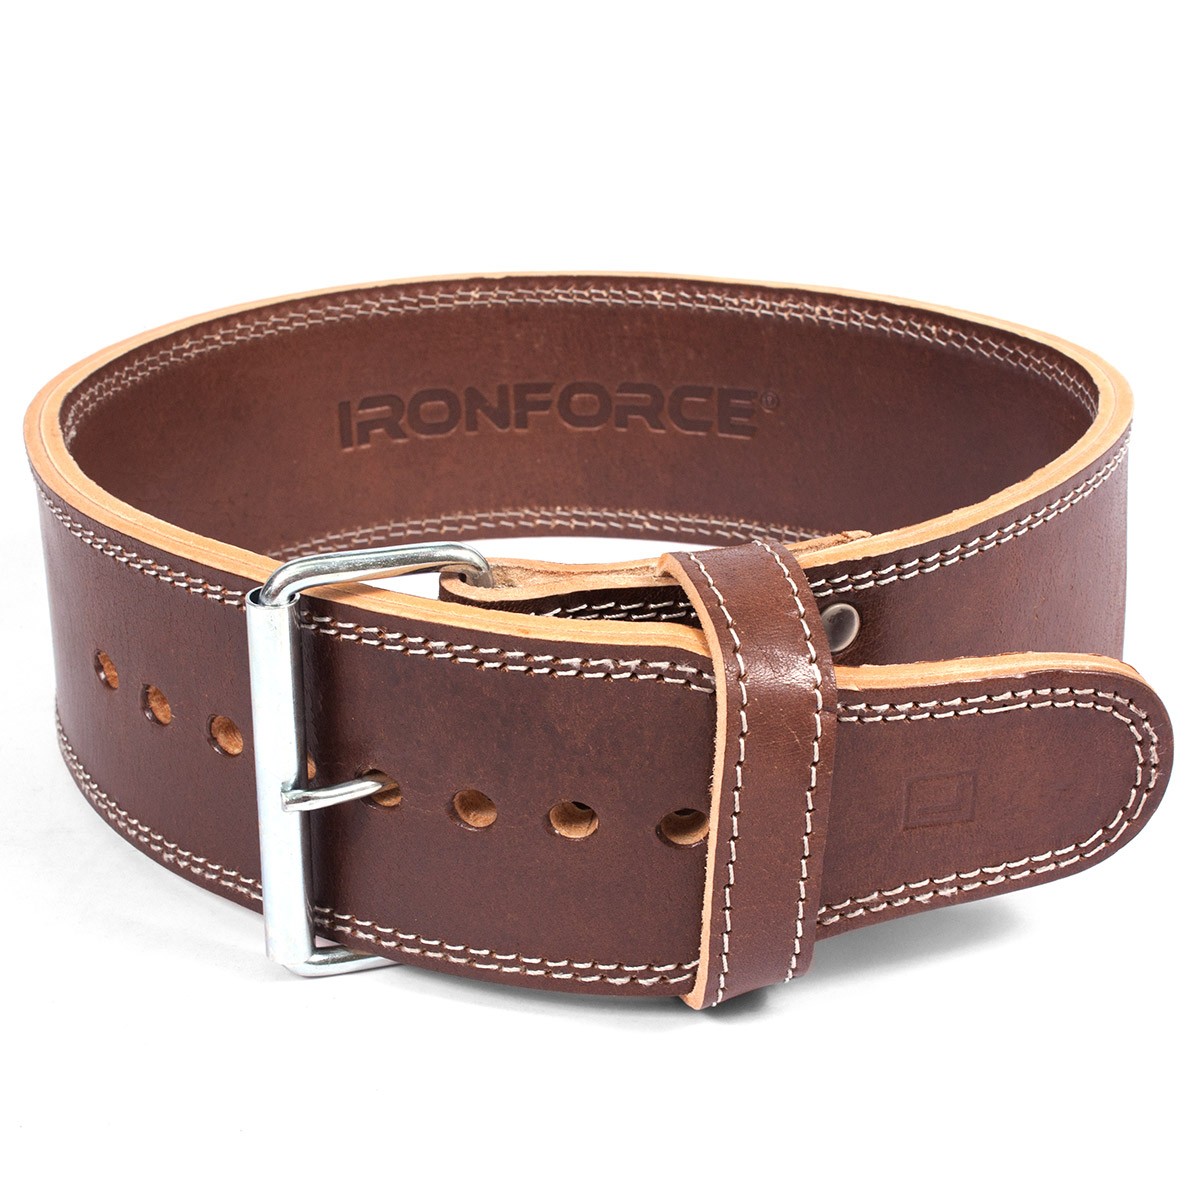 Iron Force Premium Powerlift belt